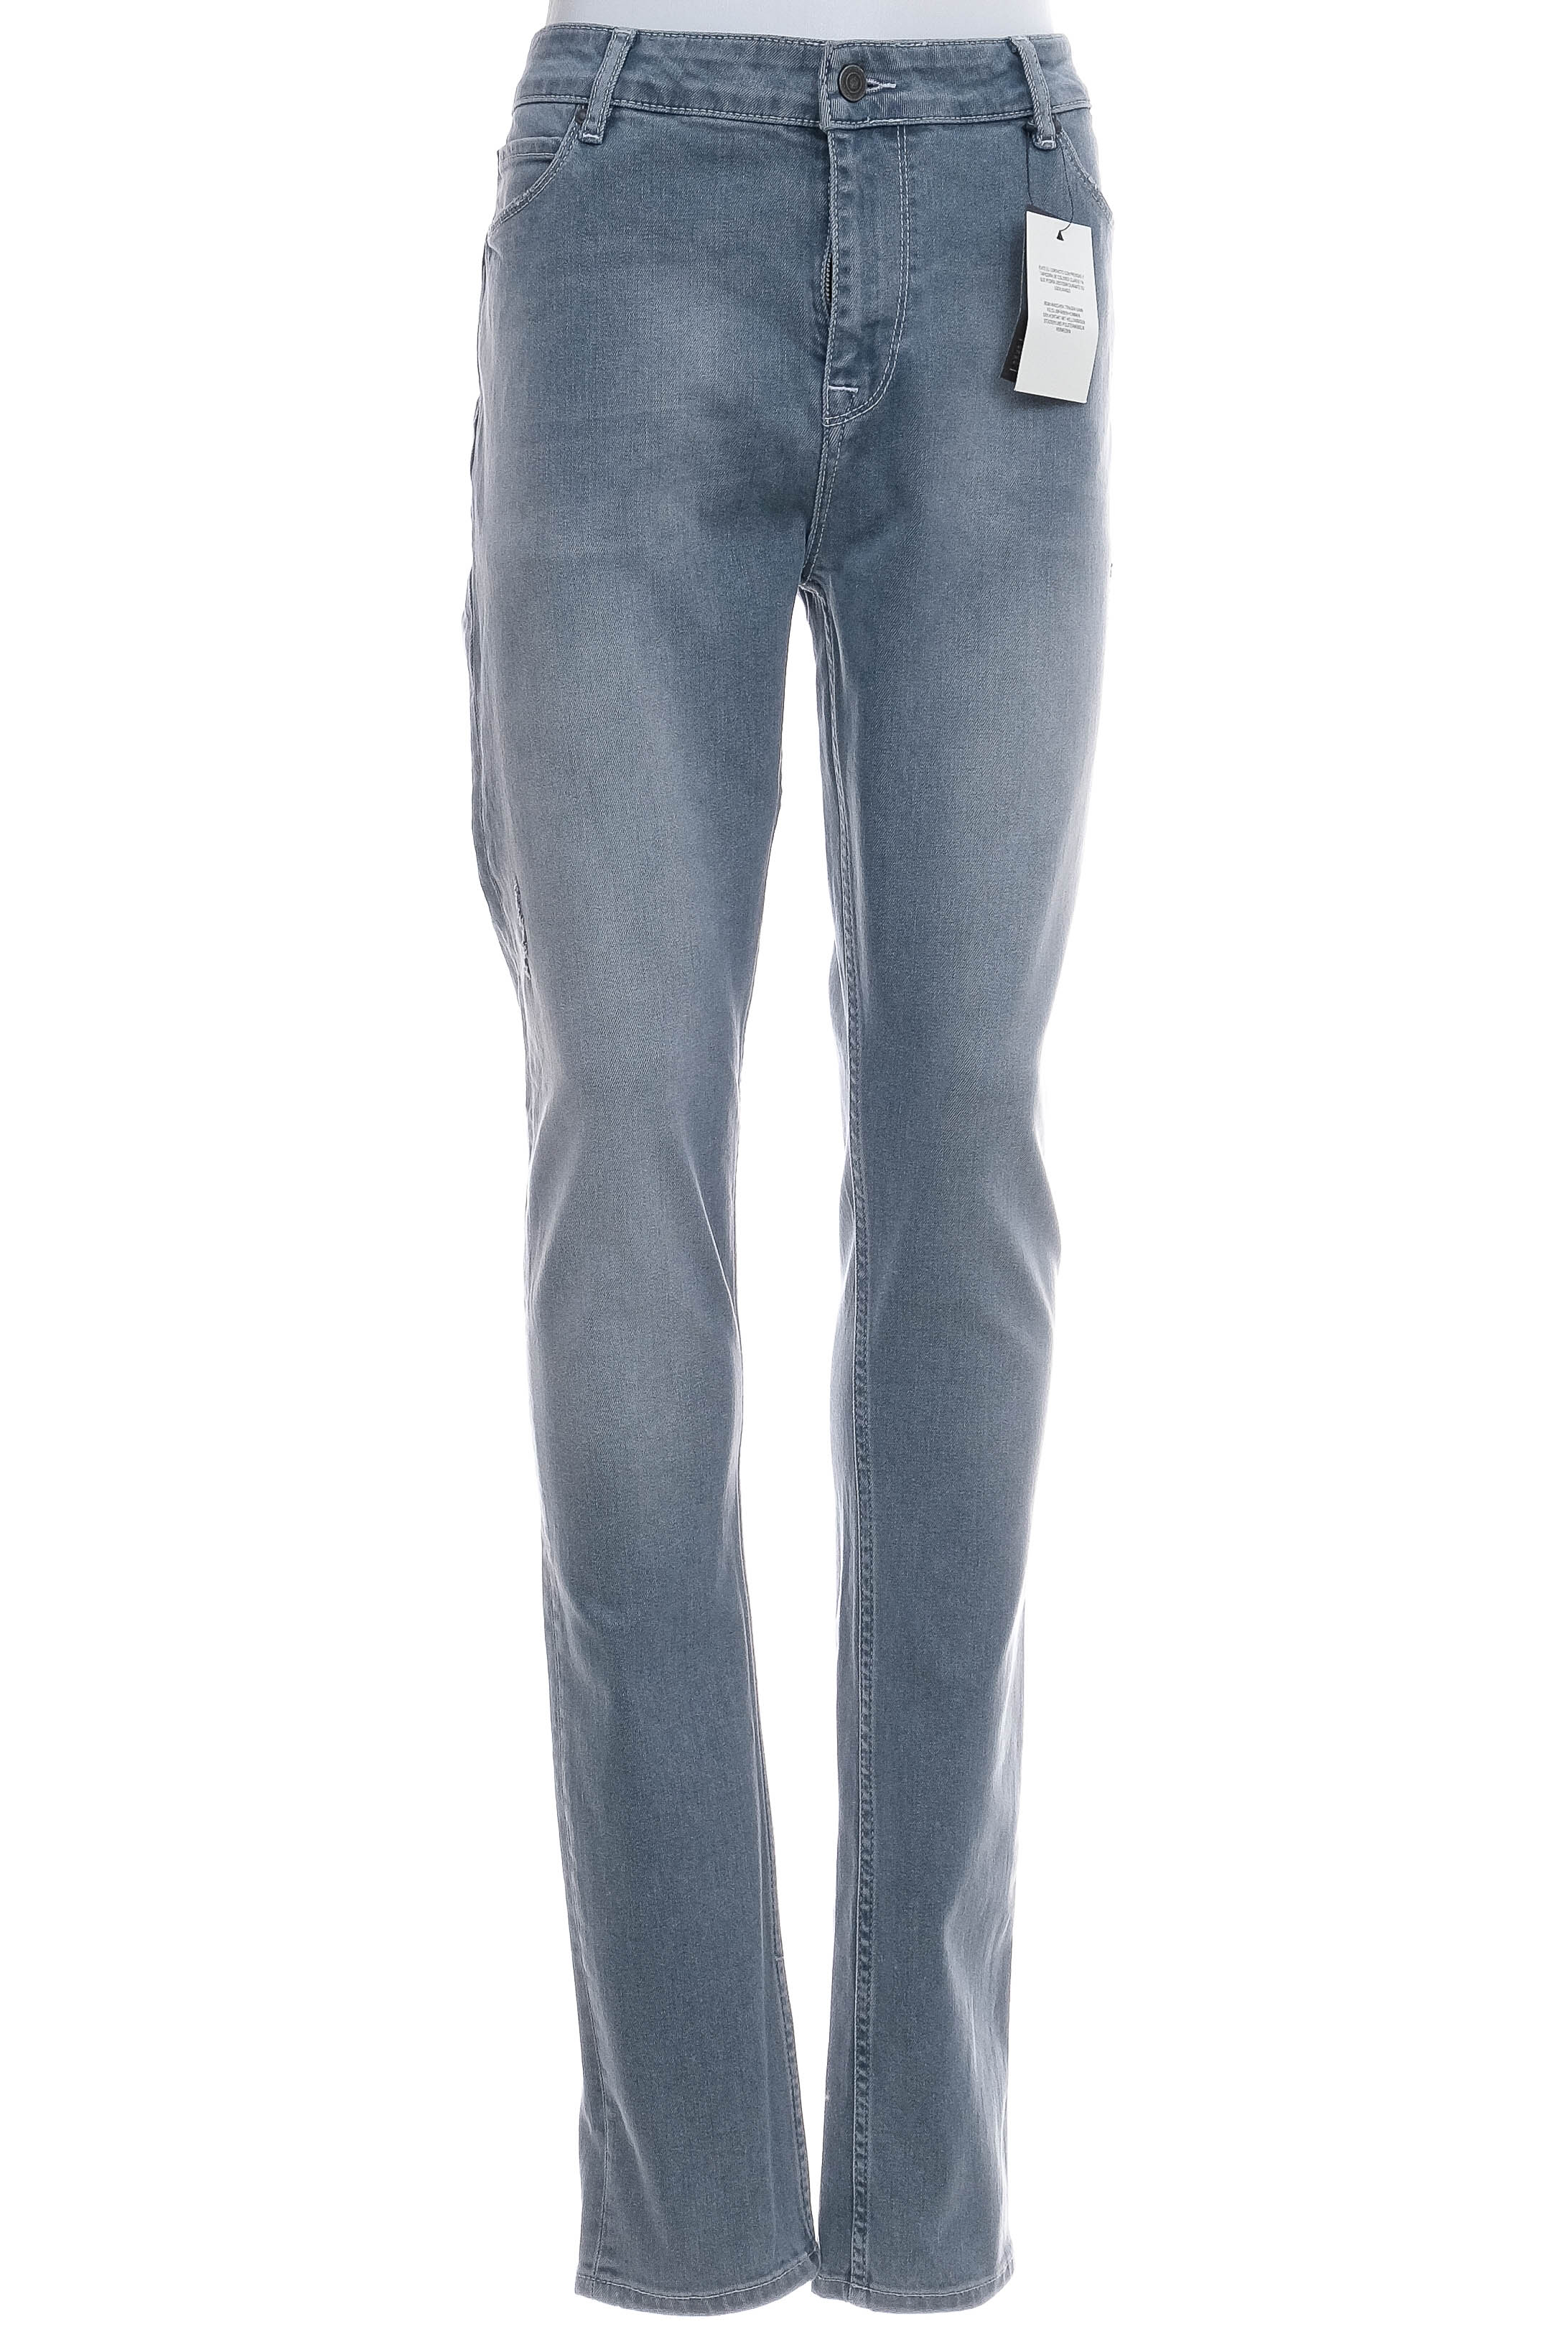 Men's jeans - Asos - 0